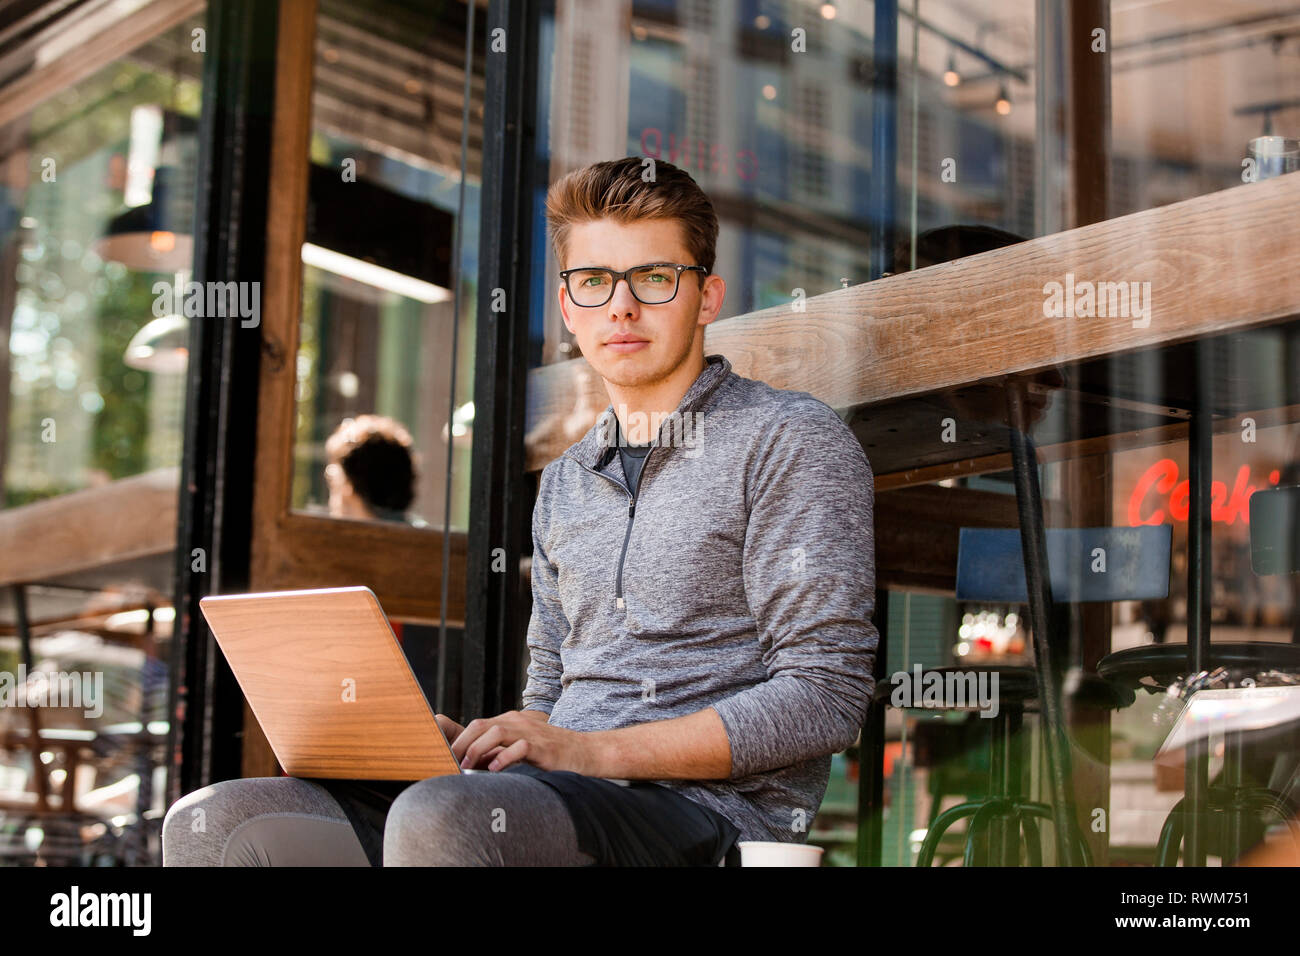 Young man using laptop at cafe, London, UK Stock Photo